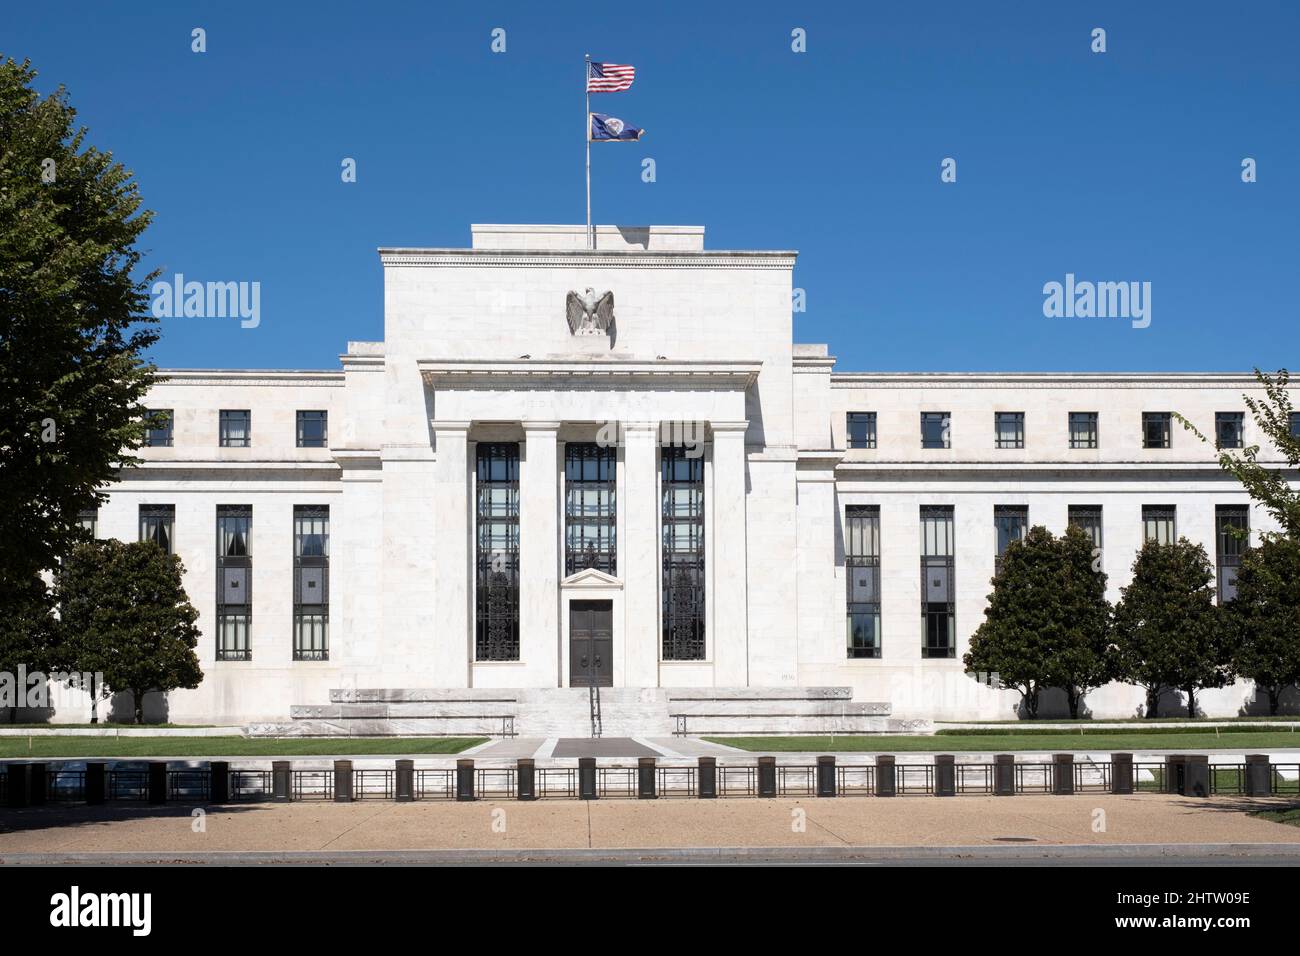 Washington, DC. Us-Notenbank. Marriner S. Eccles Federal Reserve Board Building, Board of Governors der Federal Reserve. Triumphbogen Aus Dem Klassizismus Stockfoto